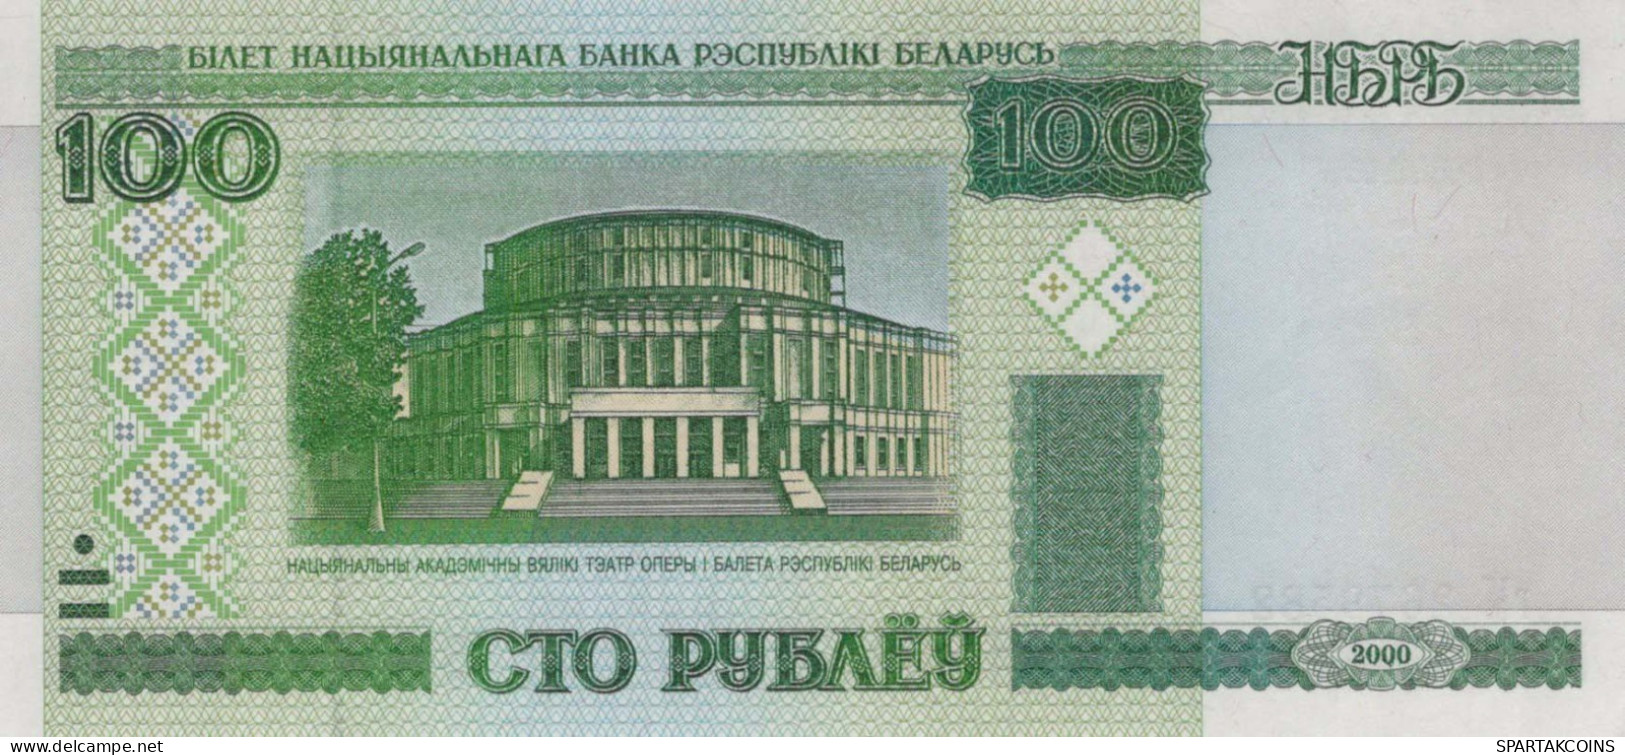 100 RUBLES 2000 BELARUS Papiergeld Banknote #PJ304 - [11] Emissions Locales